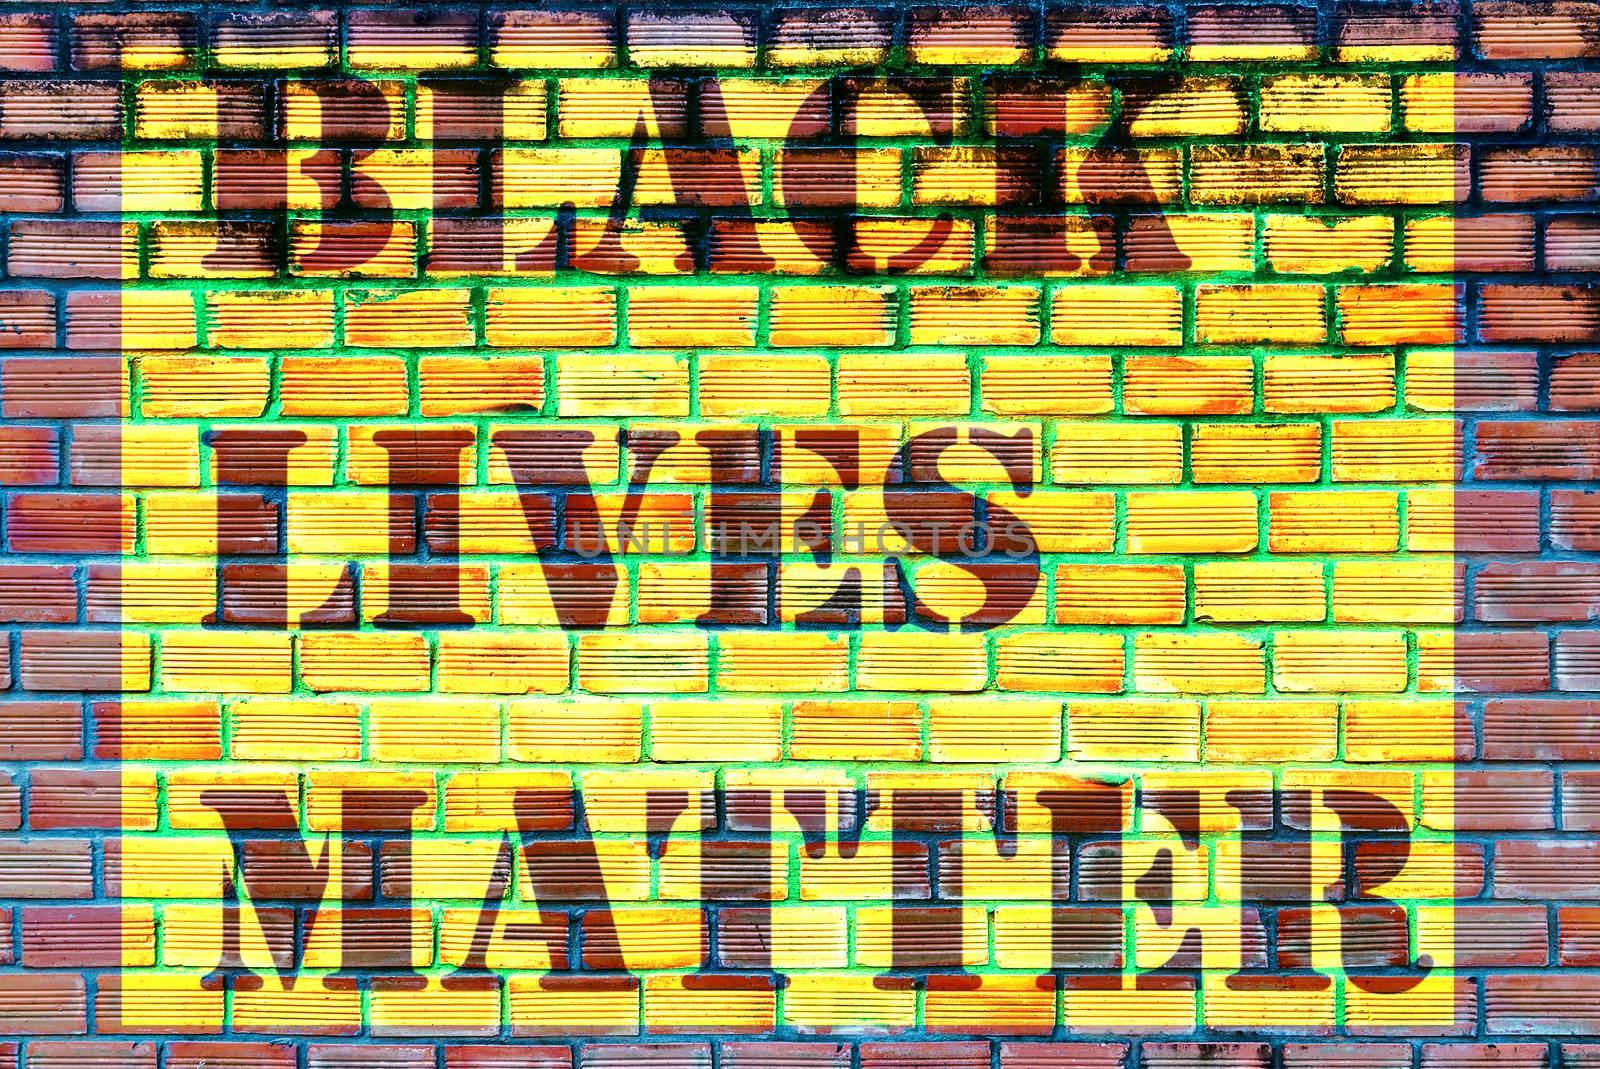 Black Lives Matter slogan text liberation banner designs stencil yellow stencil brick wall background